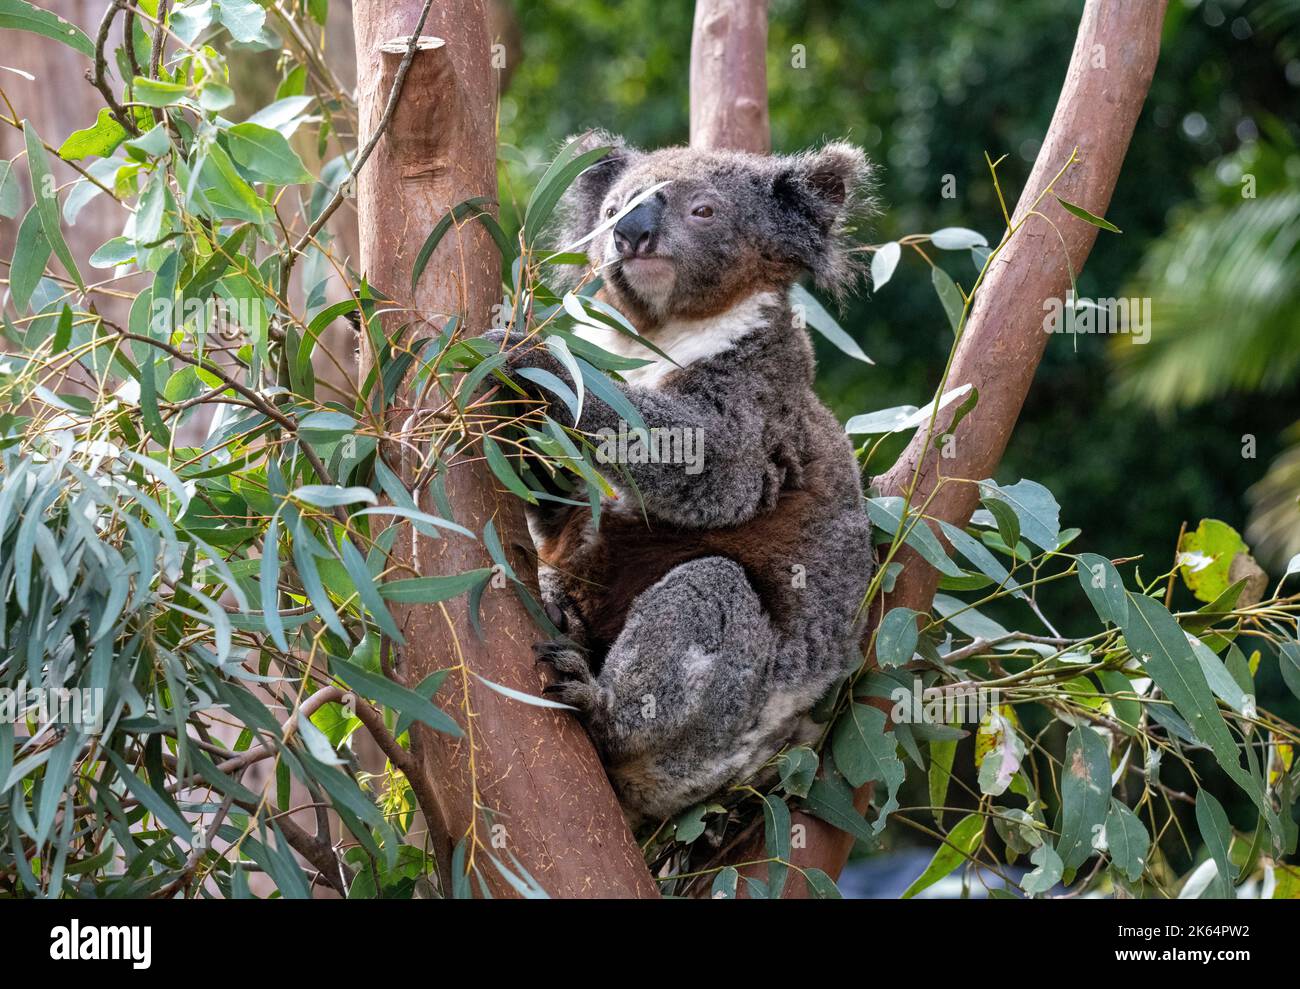 A Koala ( Phascolarctos cinereus) on a tree at Featherdale Wildlife Park in Sydney, New South Wales, Australia. (Photo by Tara Chand Malhotra) Stock Photo